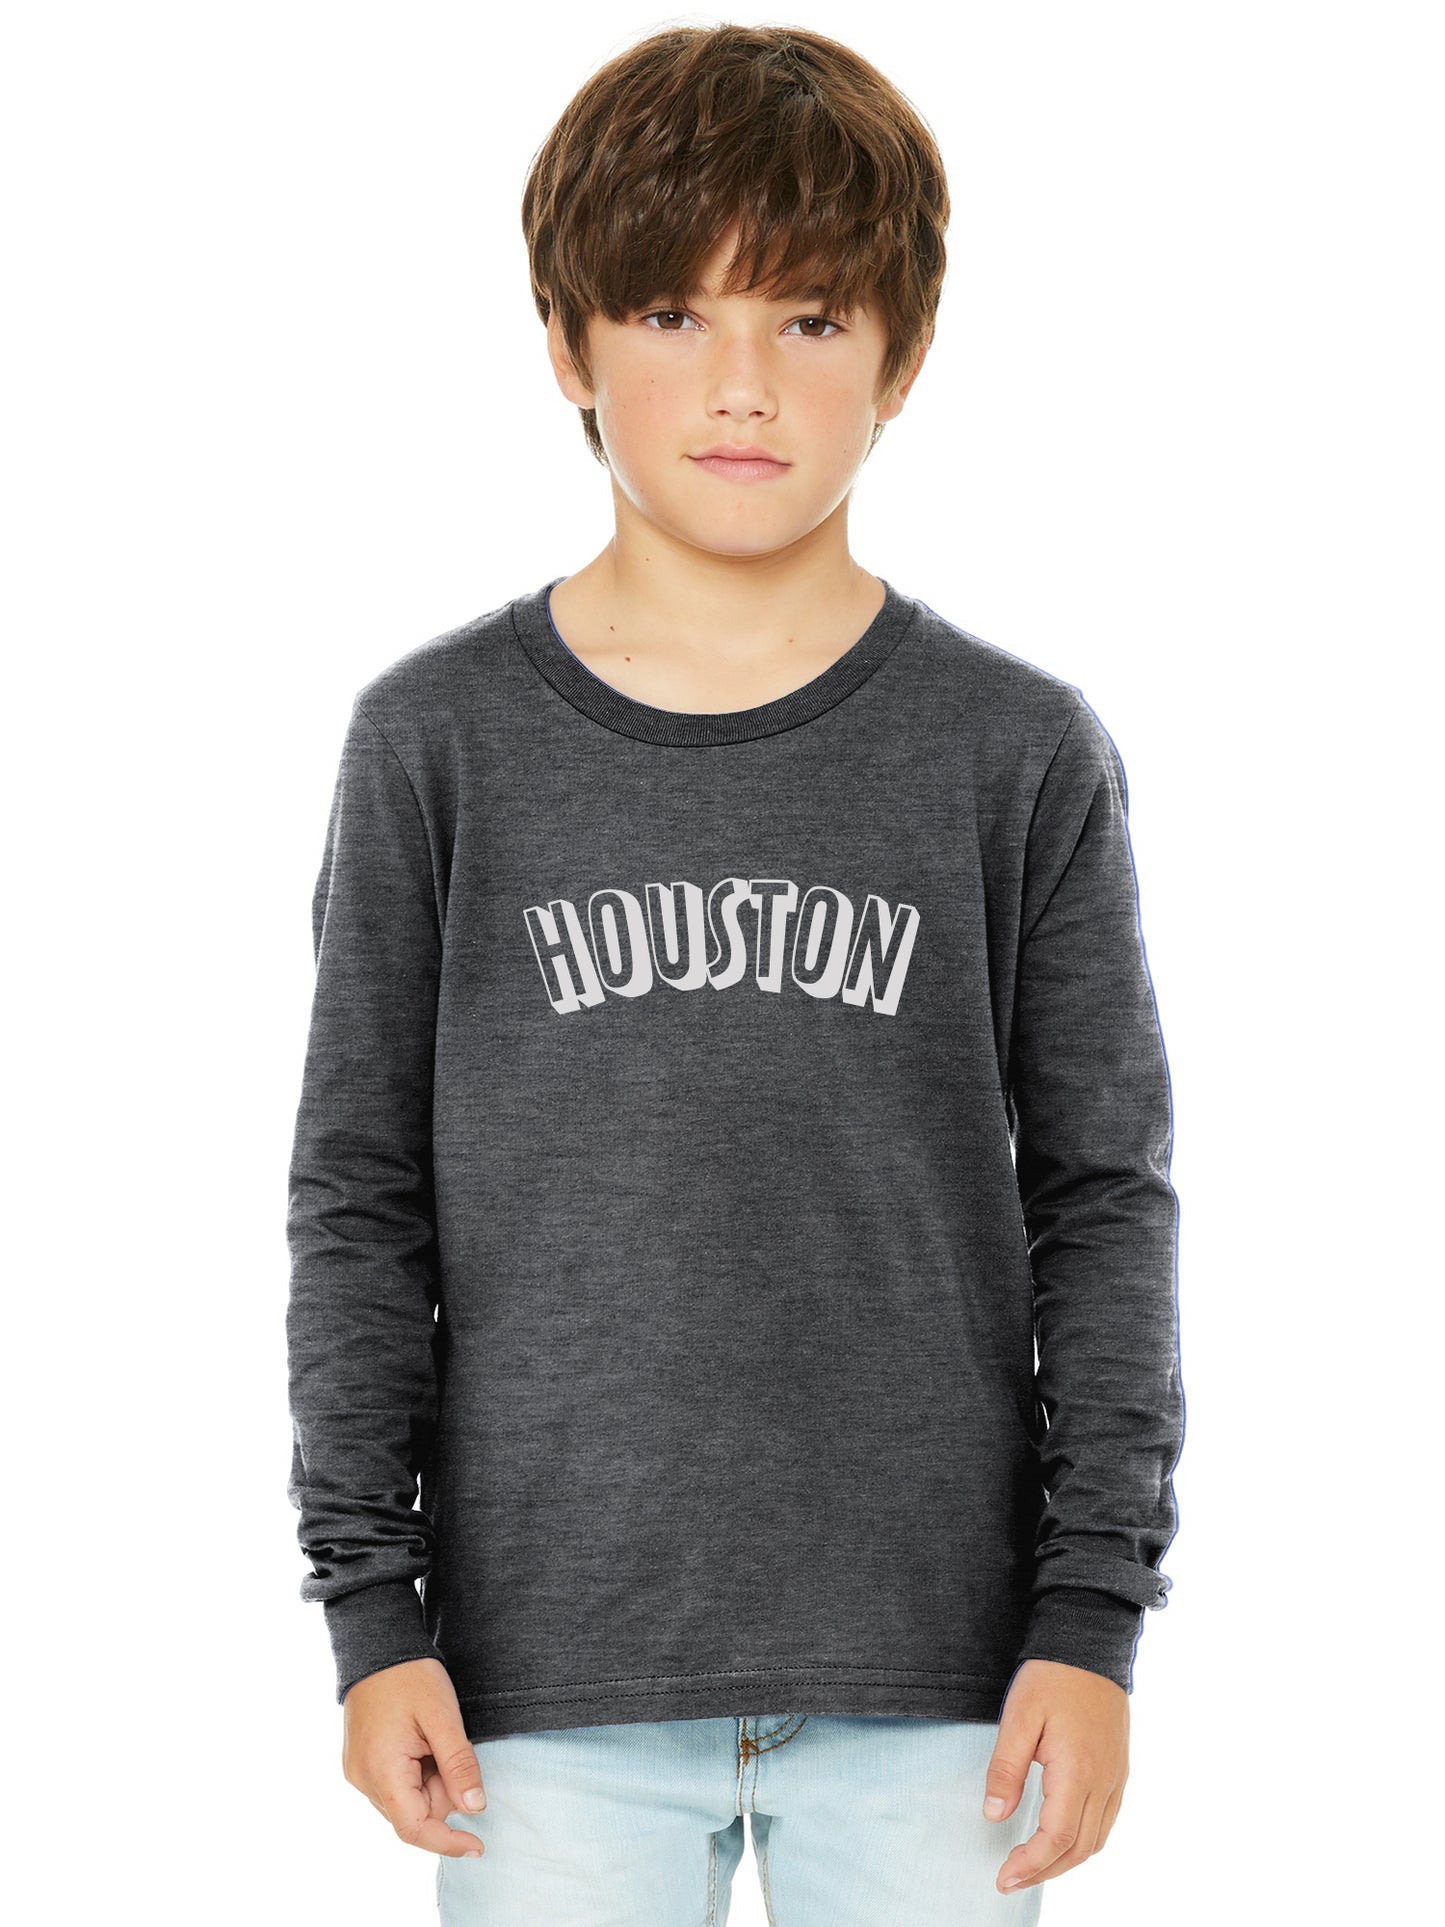 Daxton Youth Long Sleeve Houston Basic Tshirt